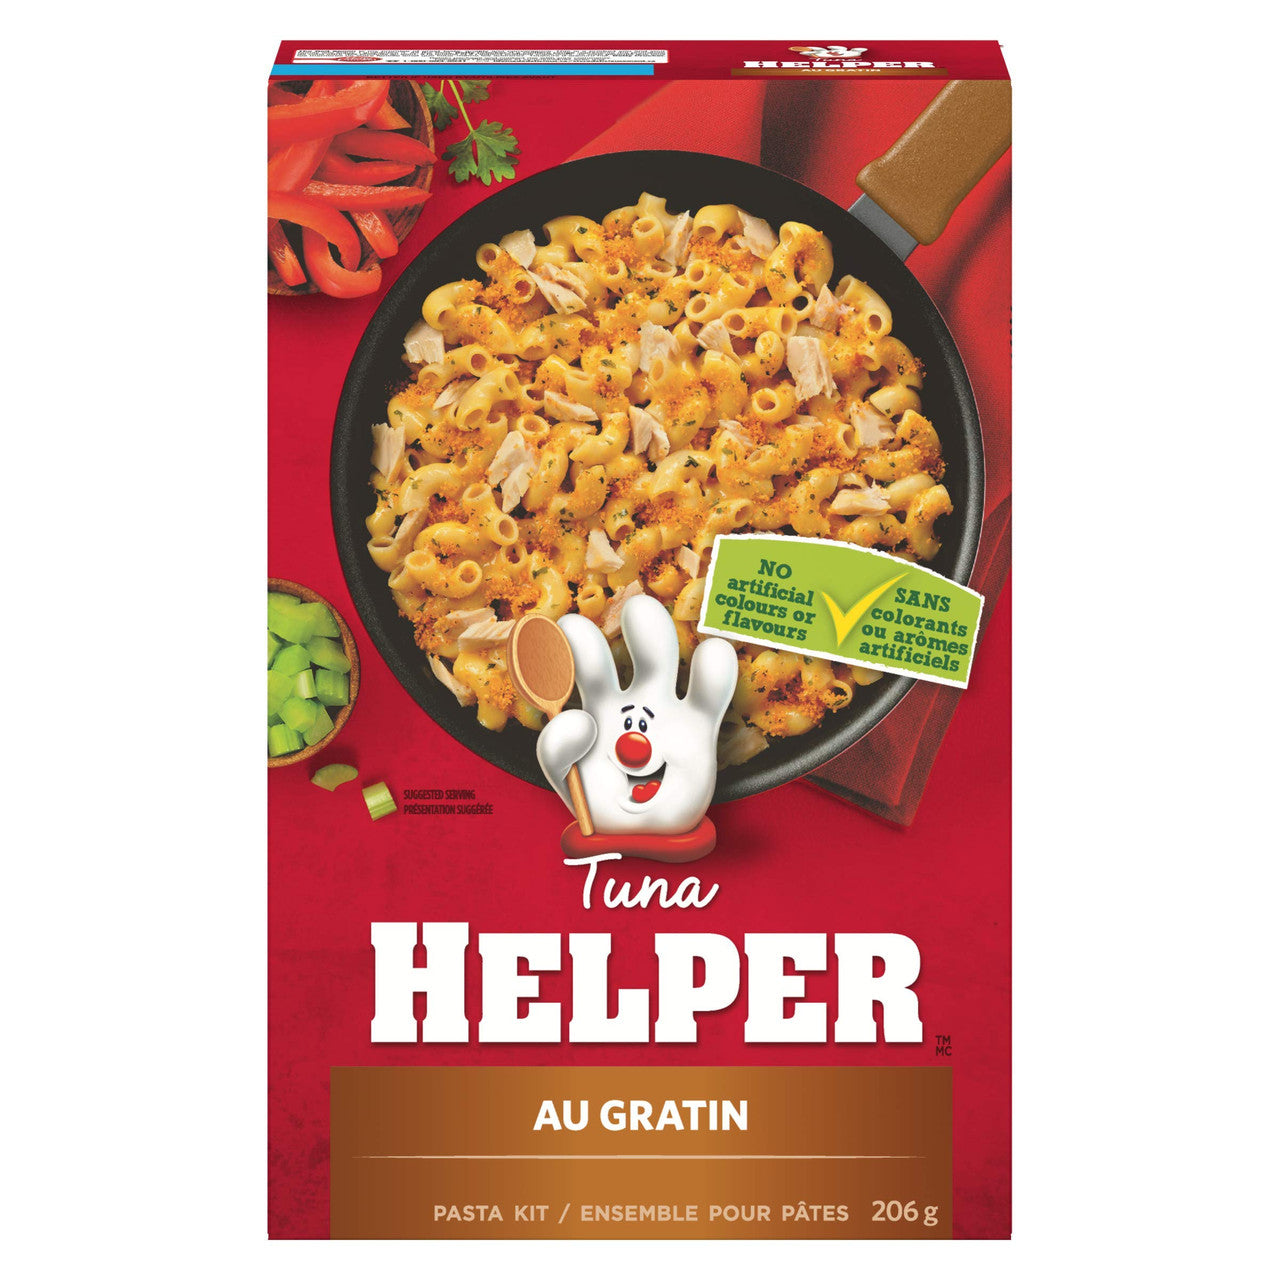 Hamburger Helper Au Gratin Tuna Helper, 206g/7.3 oz., {Imported from Canada}